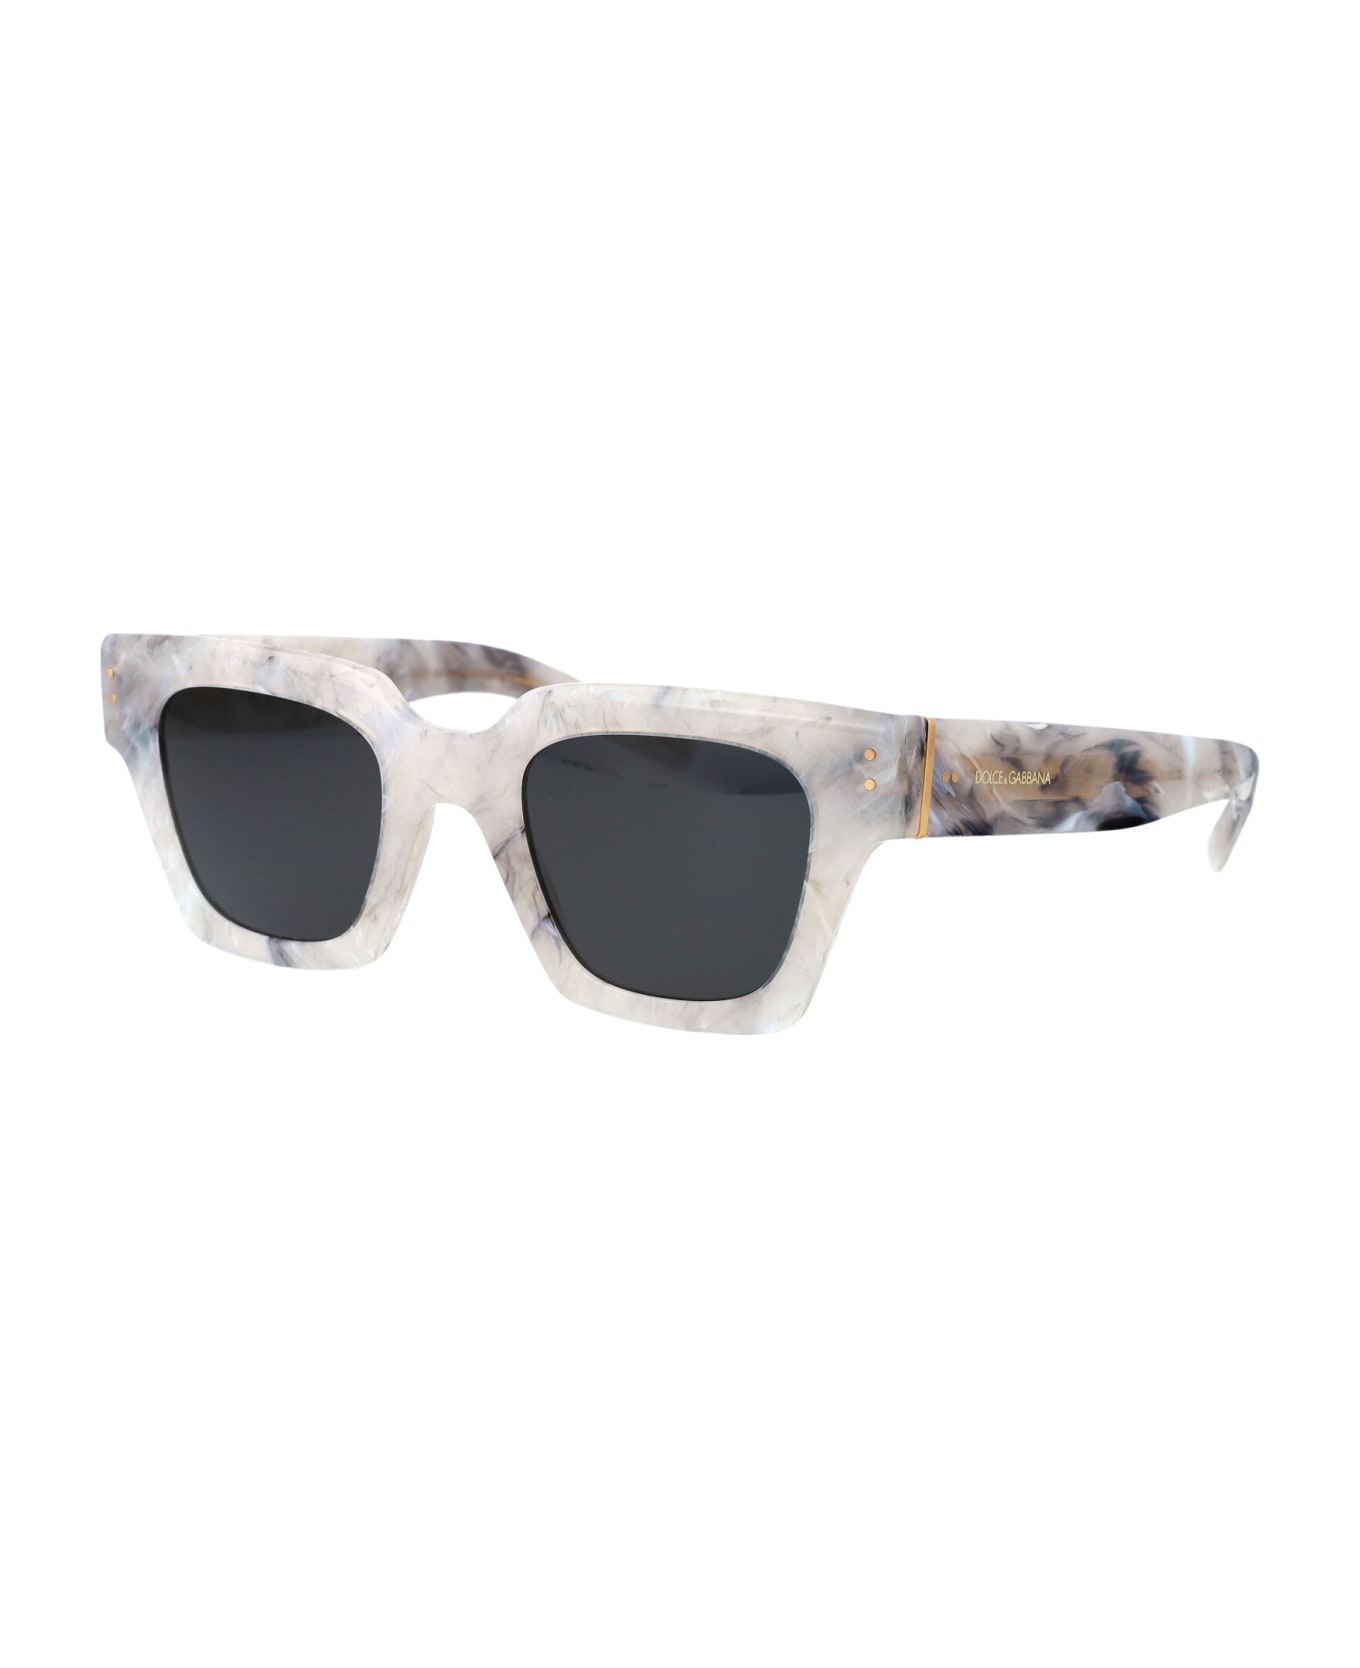 Dolce & Gabbana Eyewear 0dg4413 Sunglasses - 342887 Grey Marble